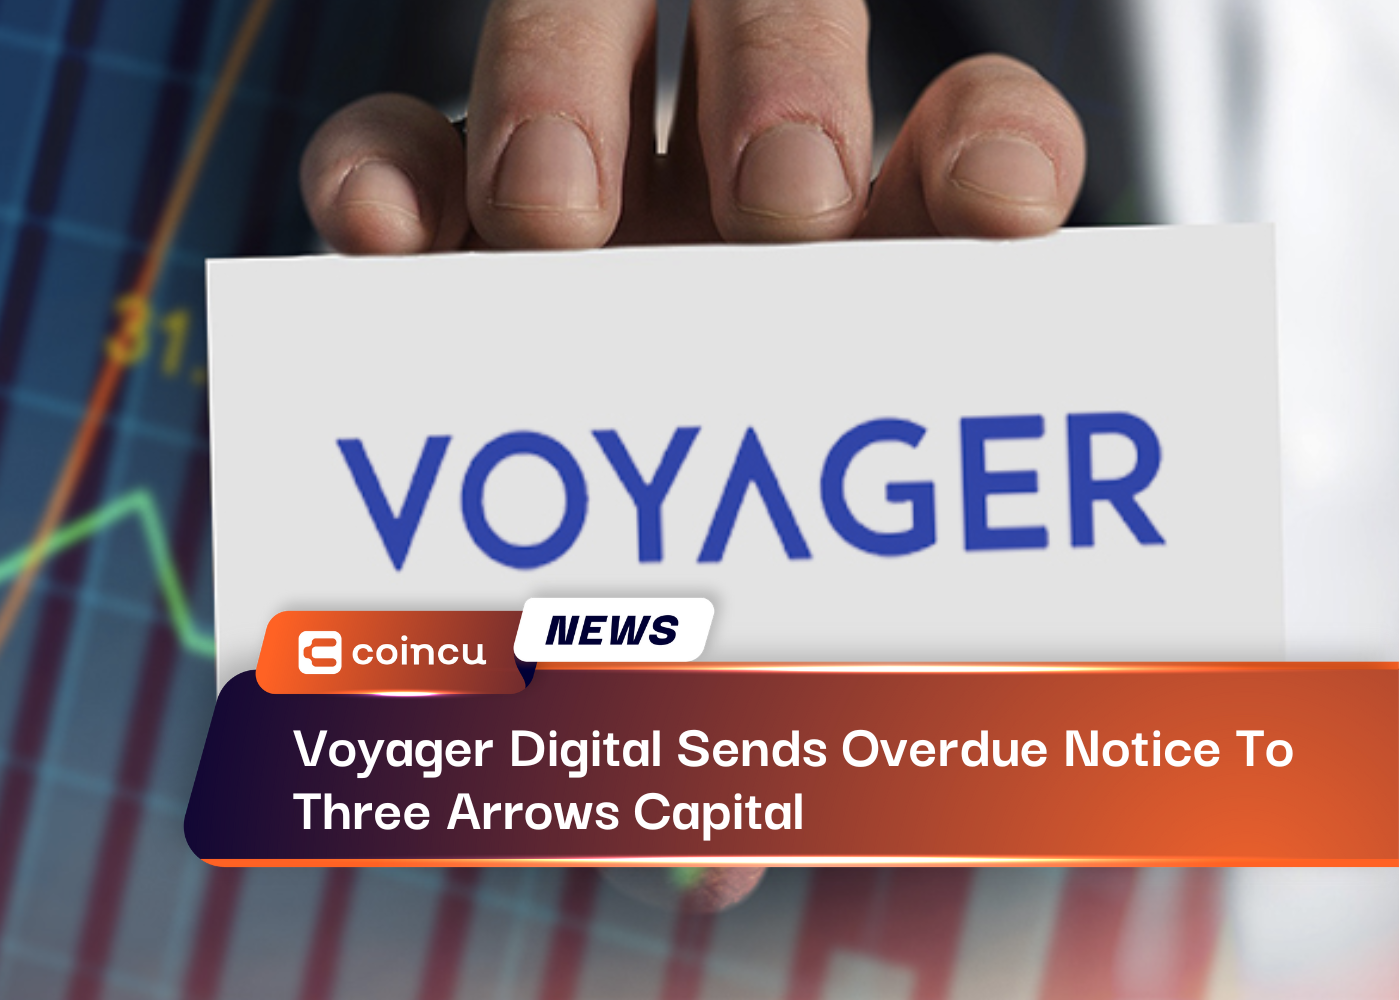 Voyager Digital 向三箭资本发出逾期通知